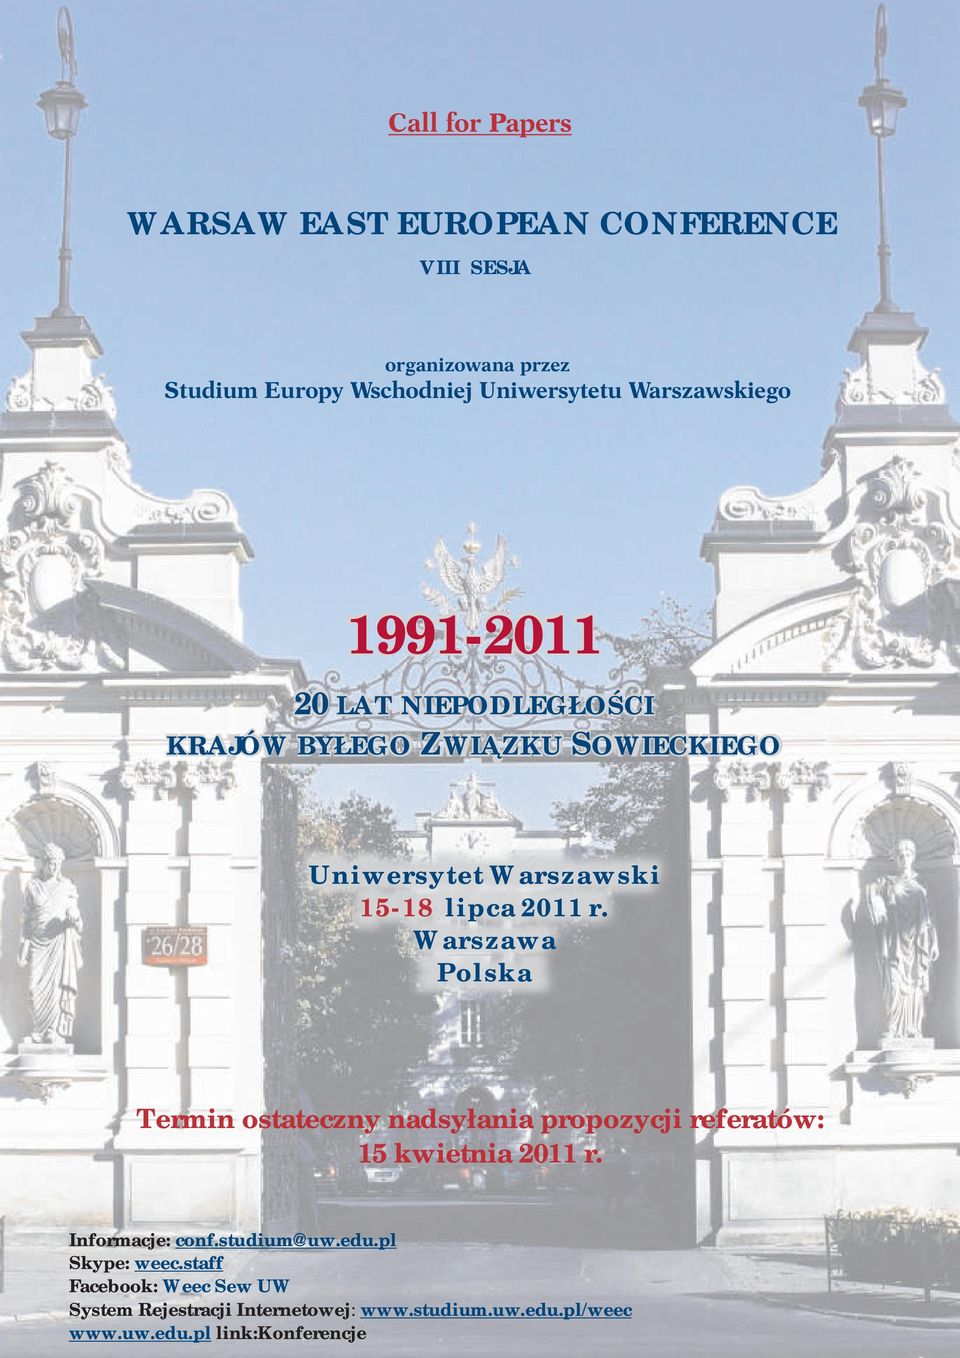 Uniwersytet Warszawski 15-18 lipca 2011 r.